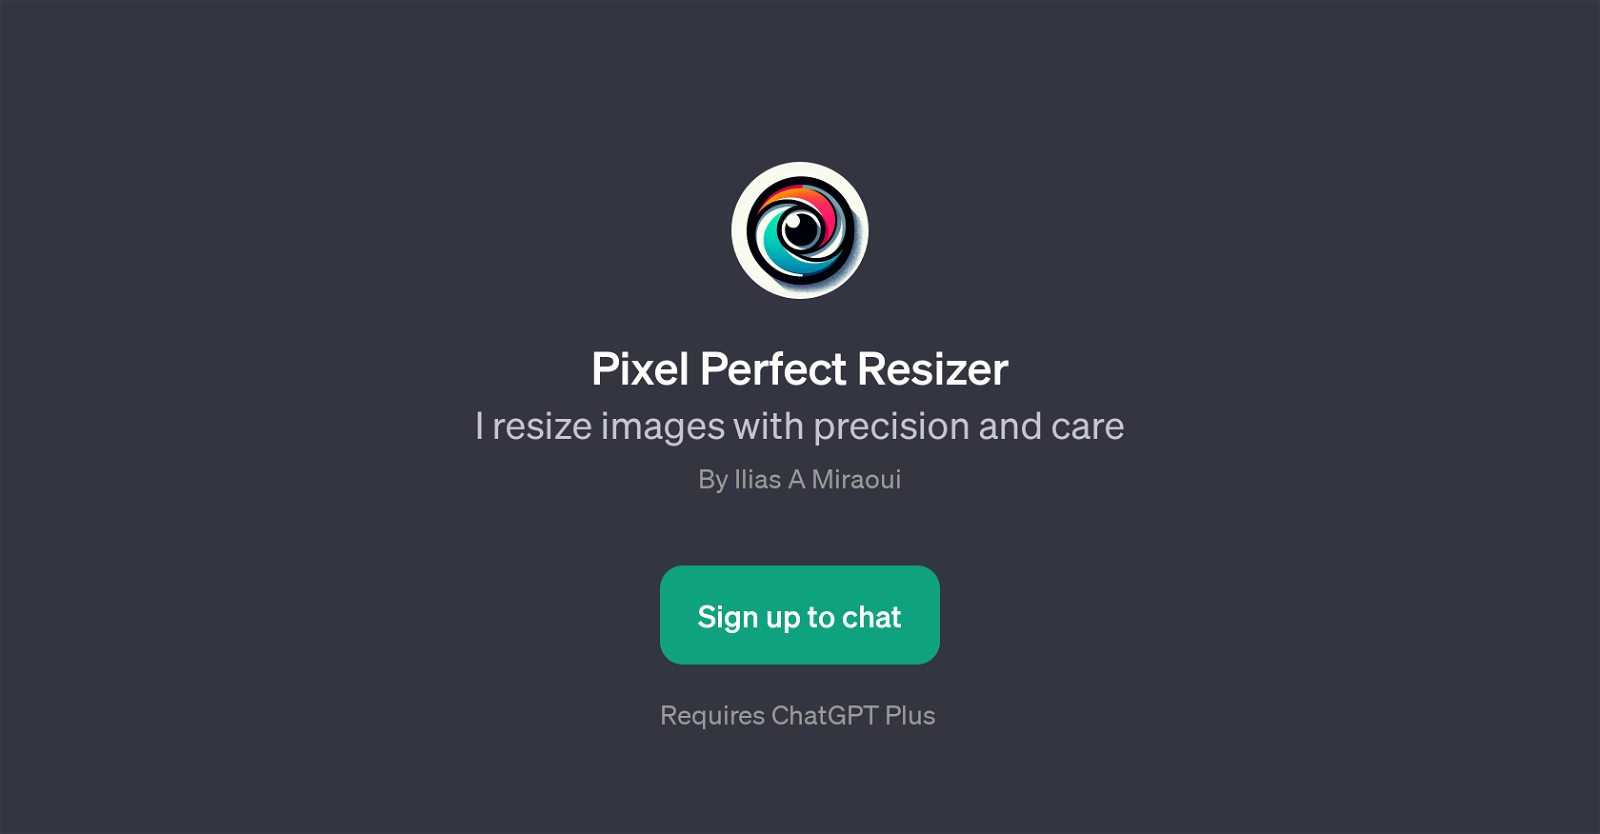 Pixel Perfect Resizer website